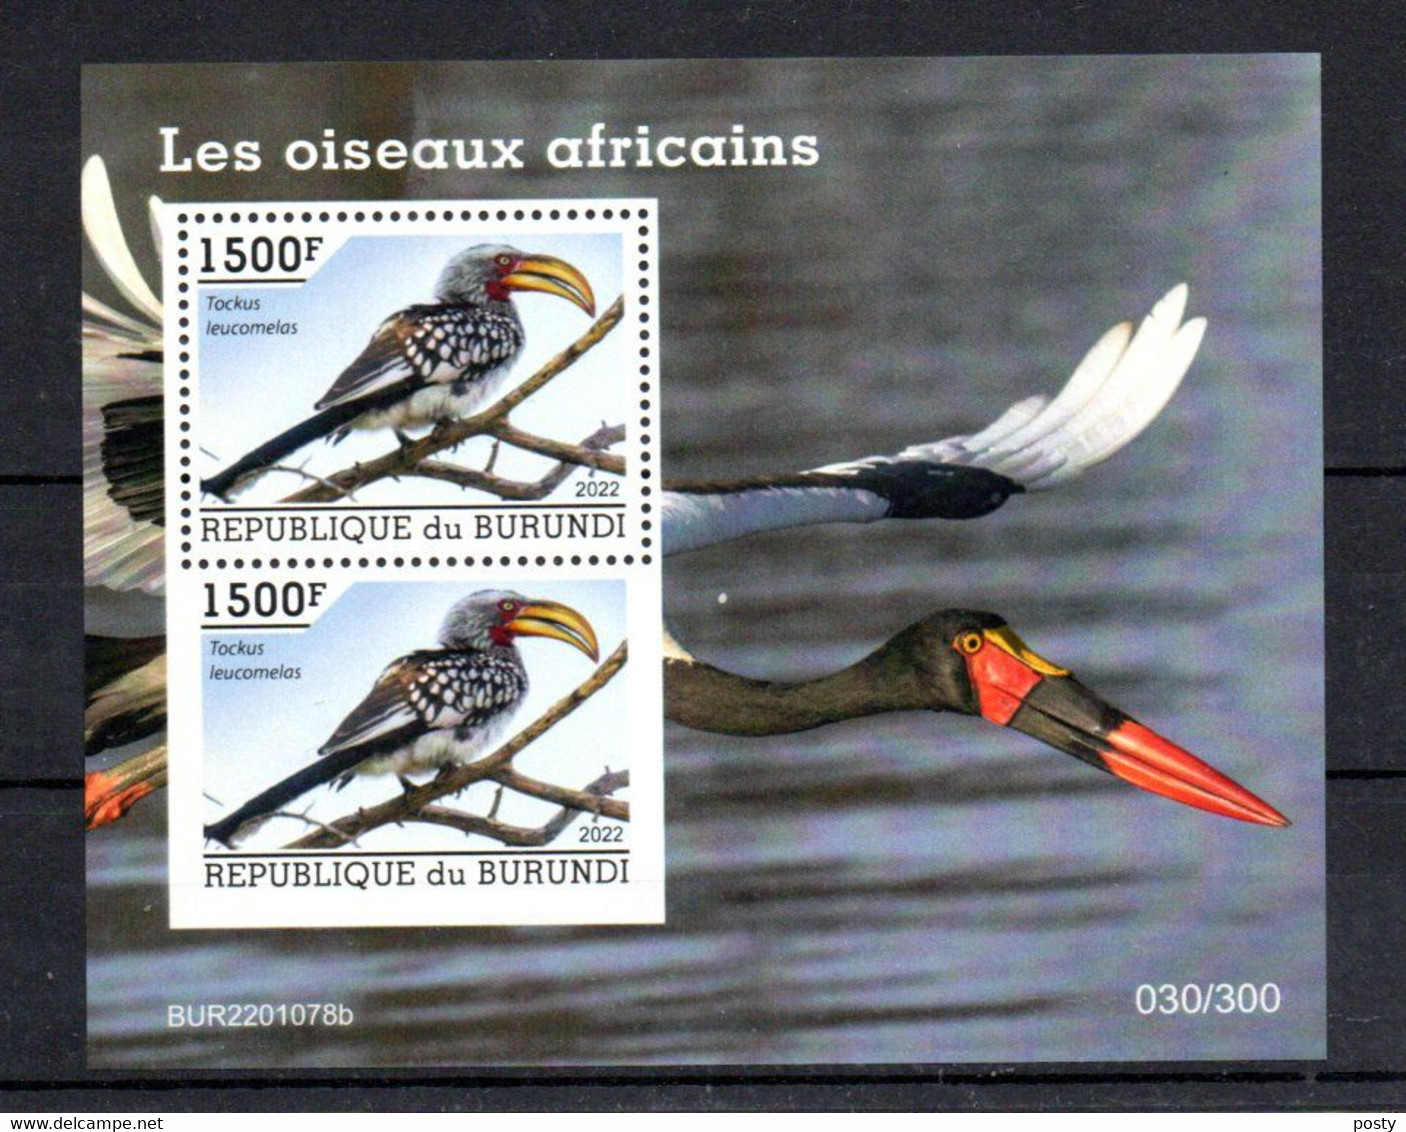 BURUNDI - 2022 - B/F - M/S - BIRDS - OISEAUX - TOUCAN - TOCKUS LEUCOMELAS - TOUCANO - - Hojas Y Bloques